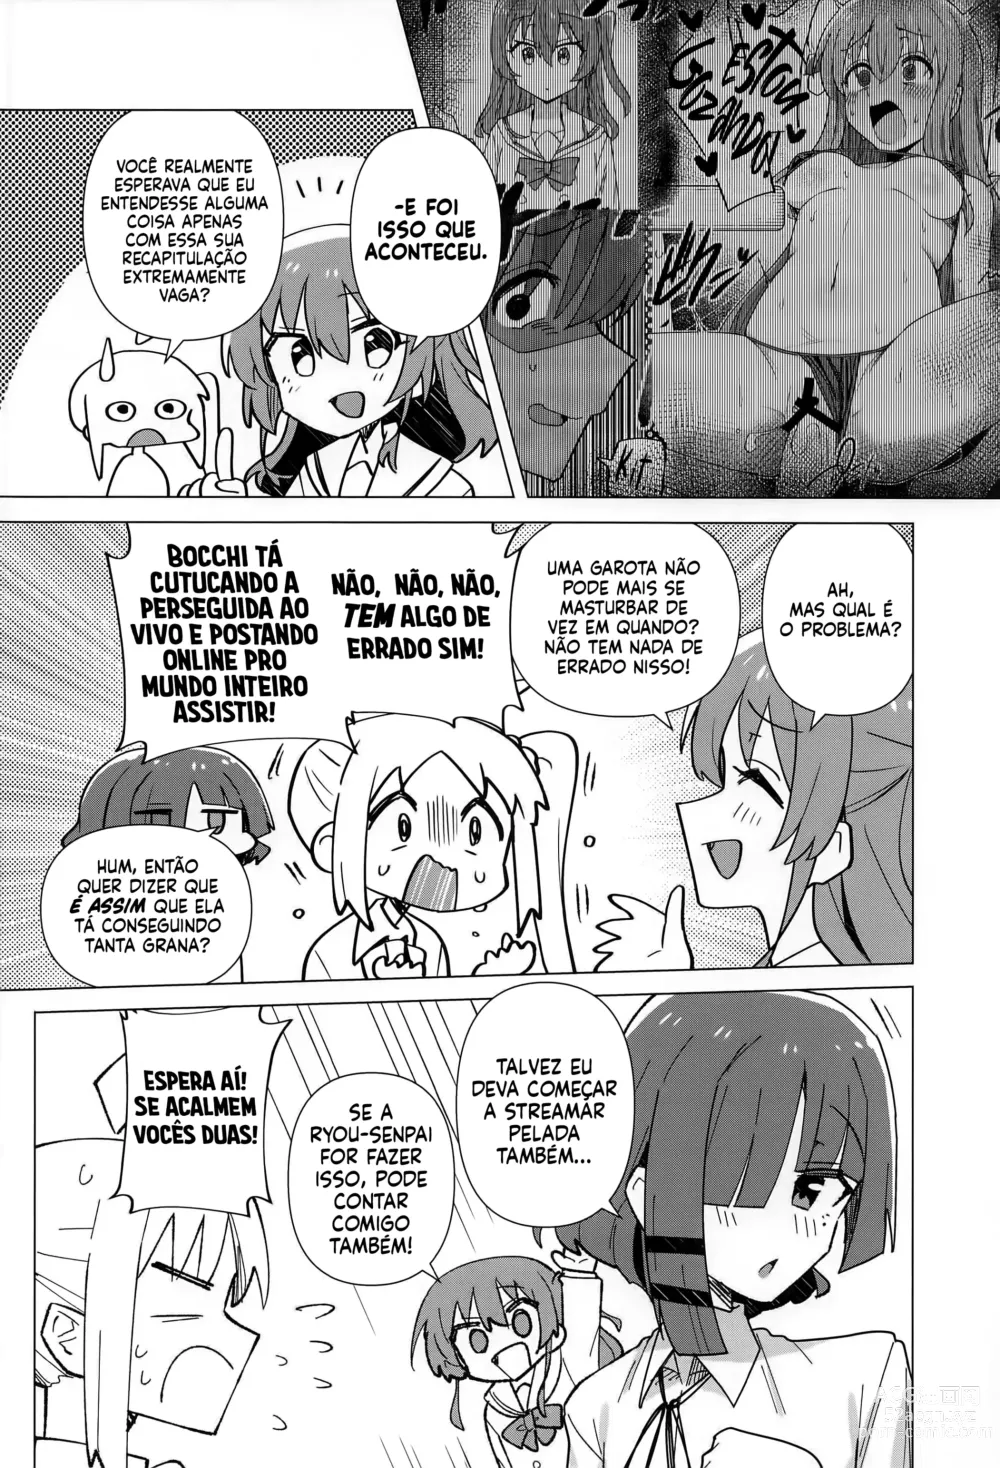 Page 3 of doujinshi Fome Insaciável